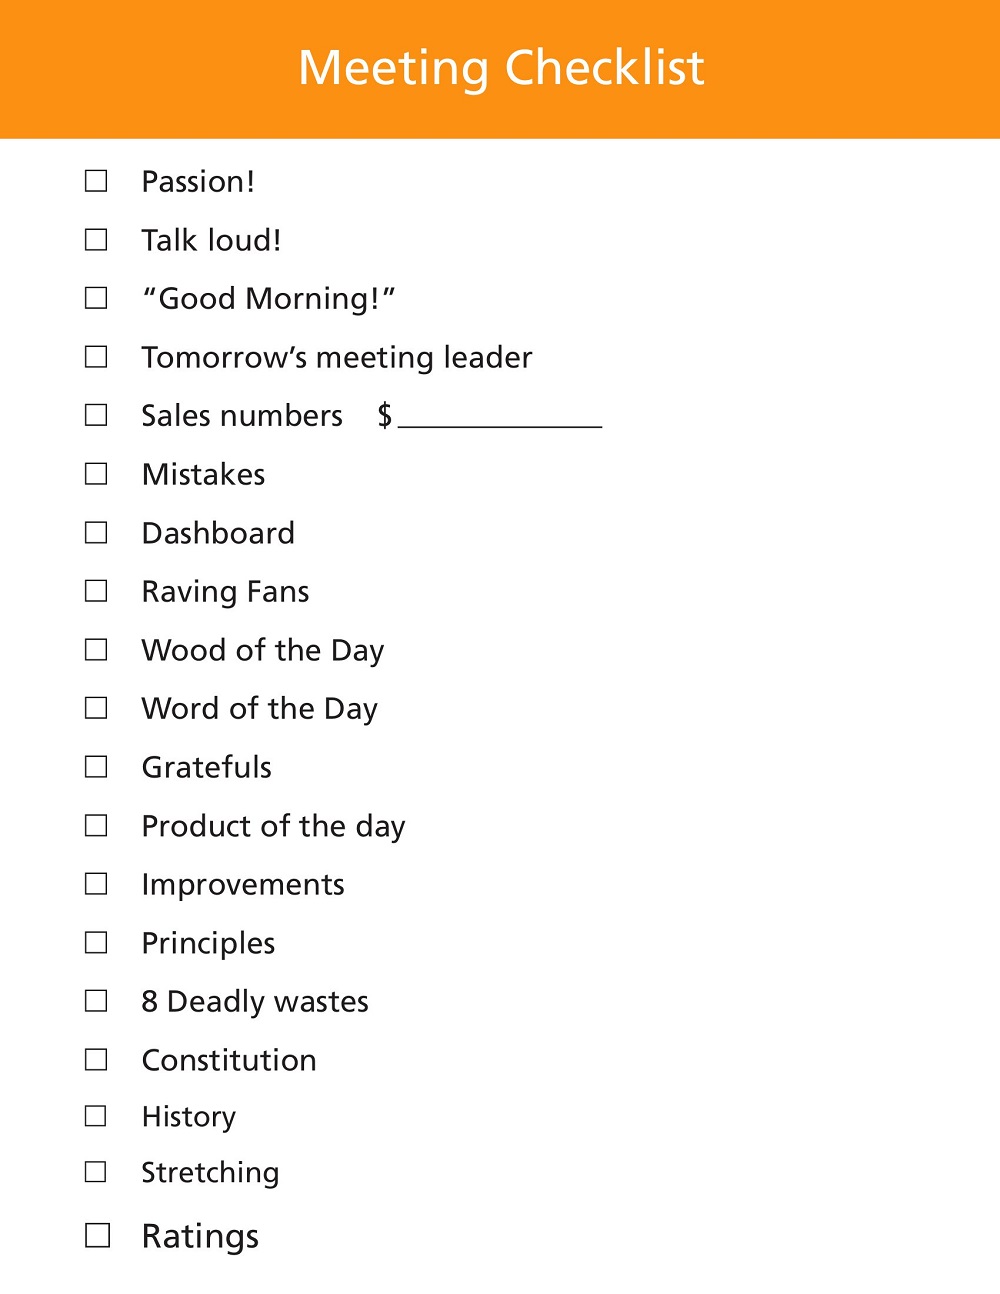 Meeting Checklist Template PDF